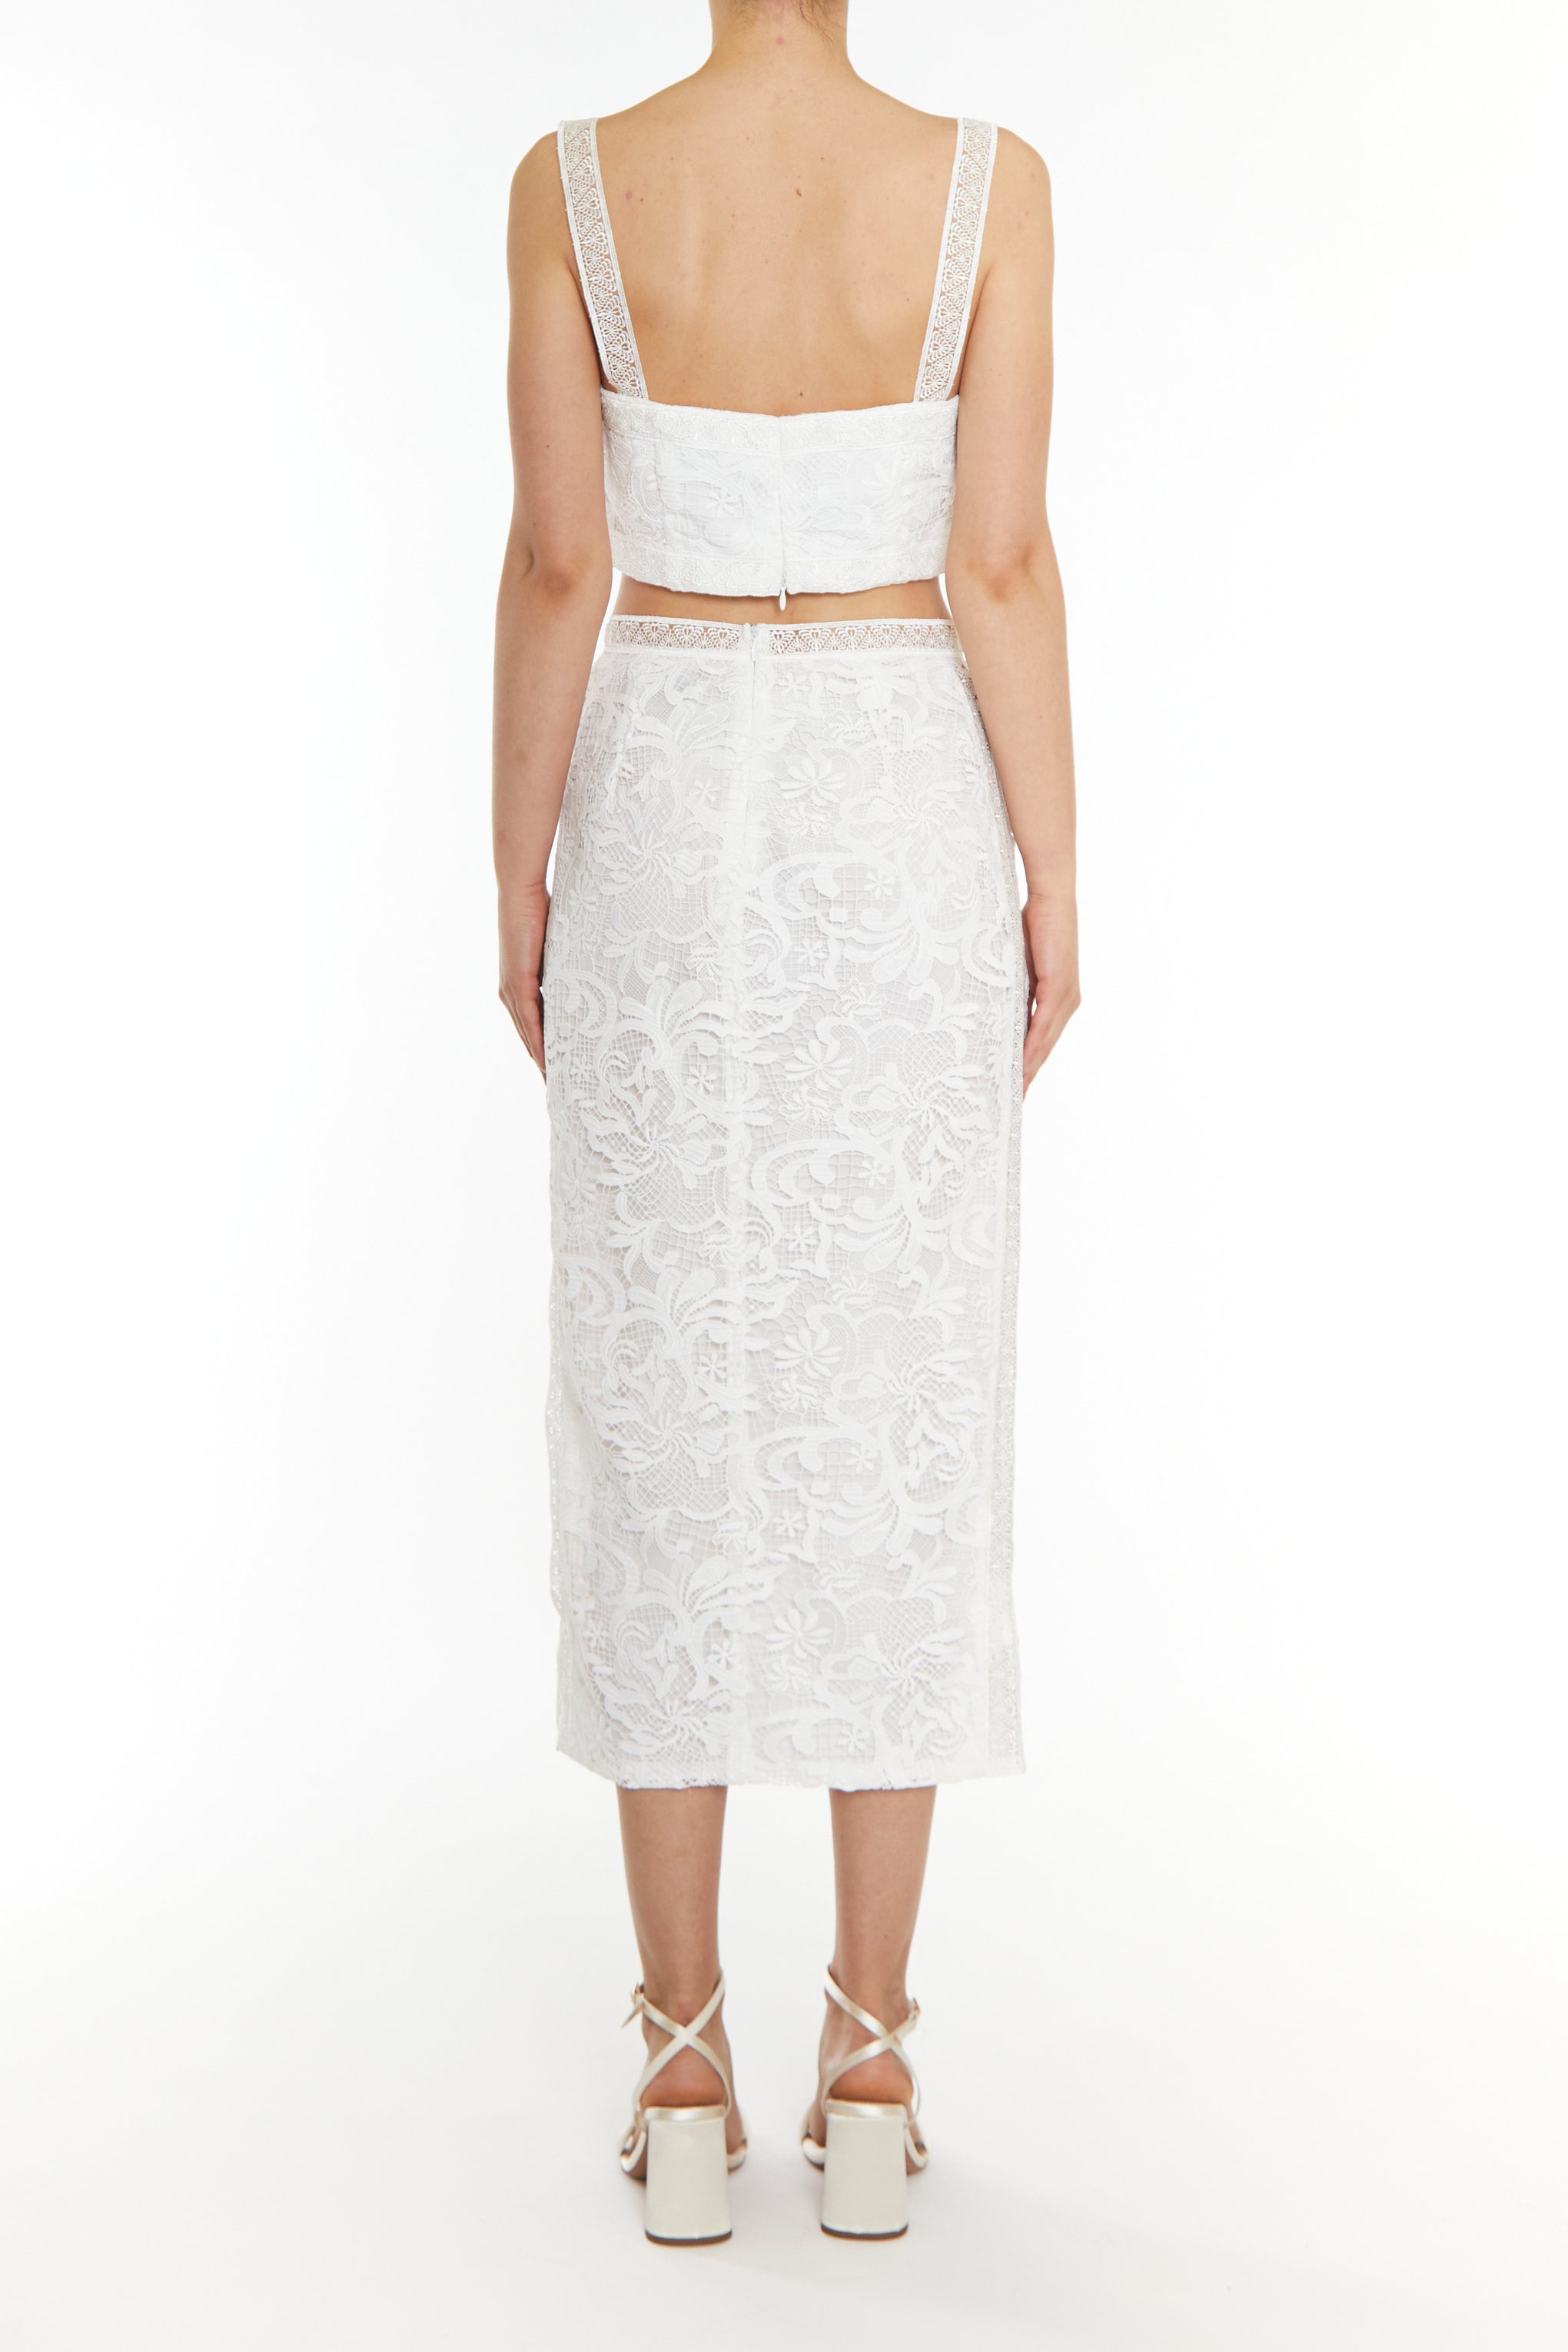 Celine Co-ord White Lace Trim Pencil Midi Skirt-image-2